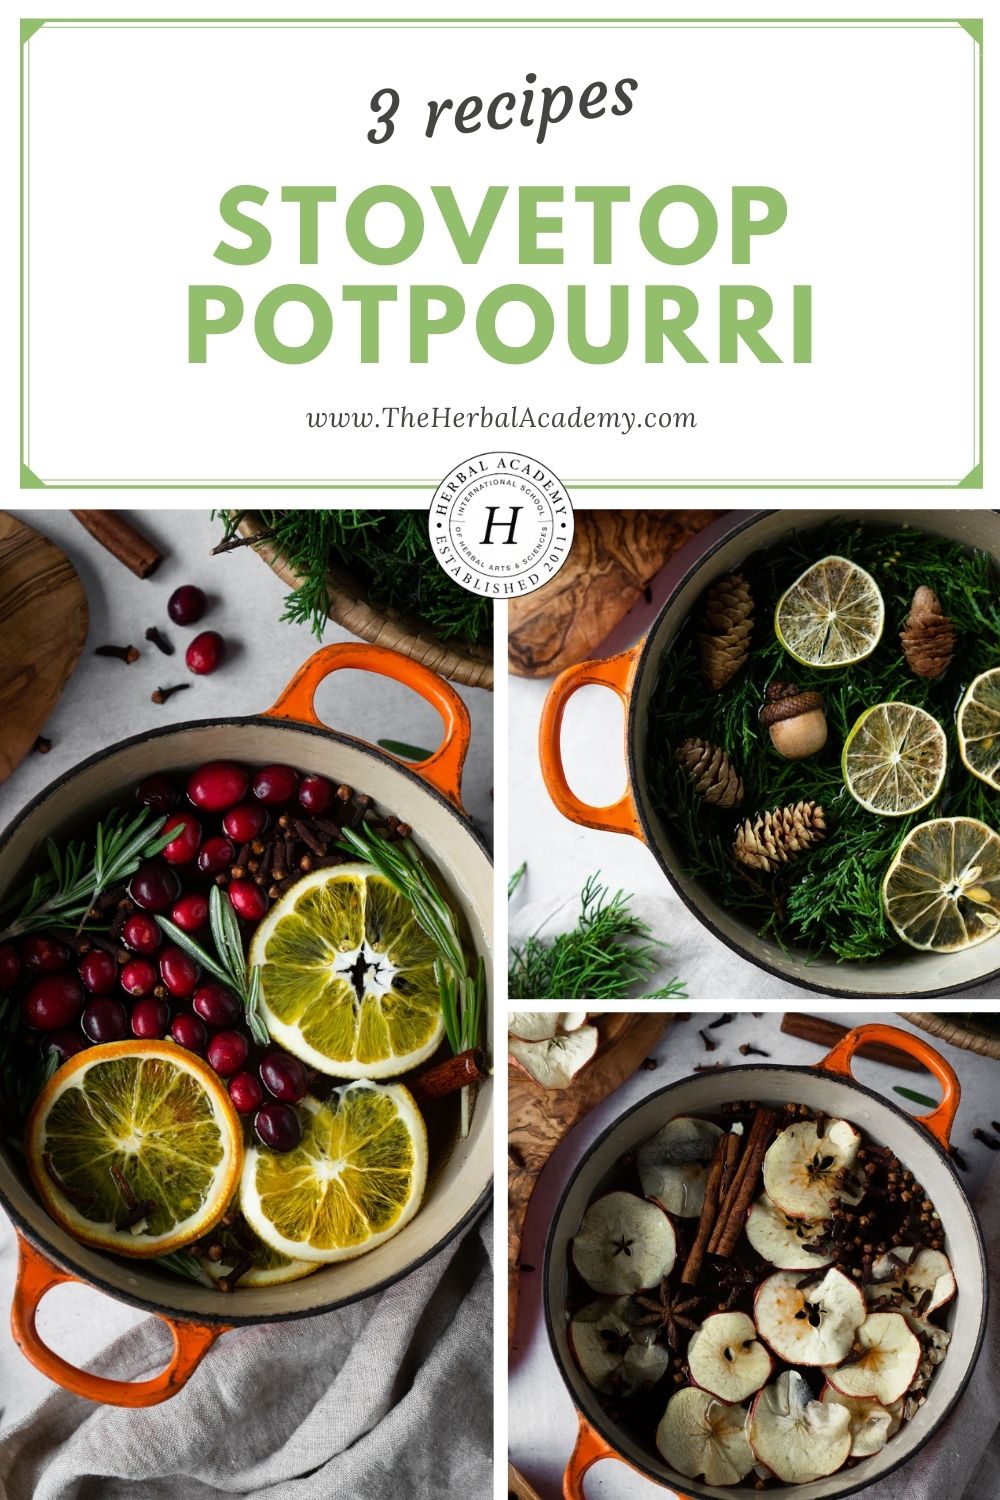 Stovetop Potpourri Recipes Pinterest graphic